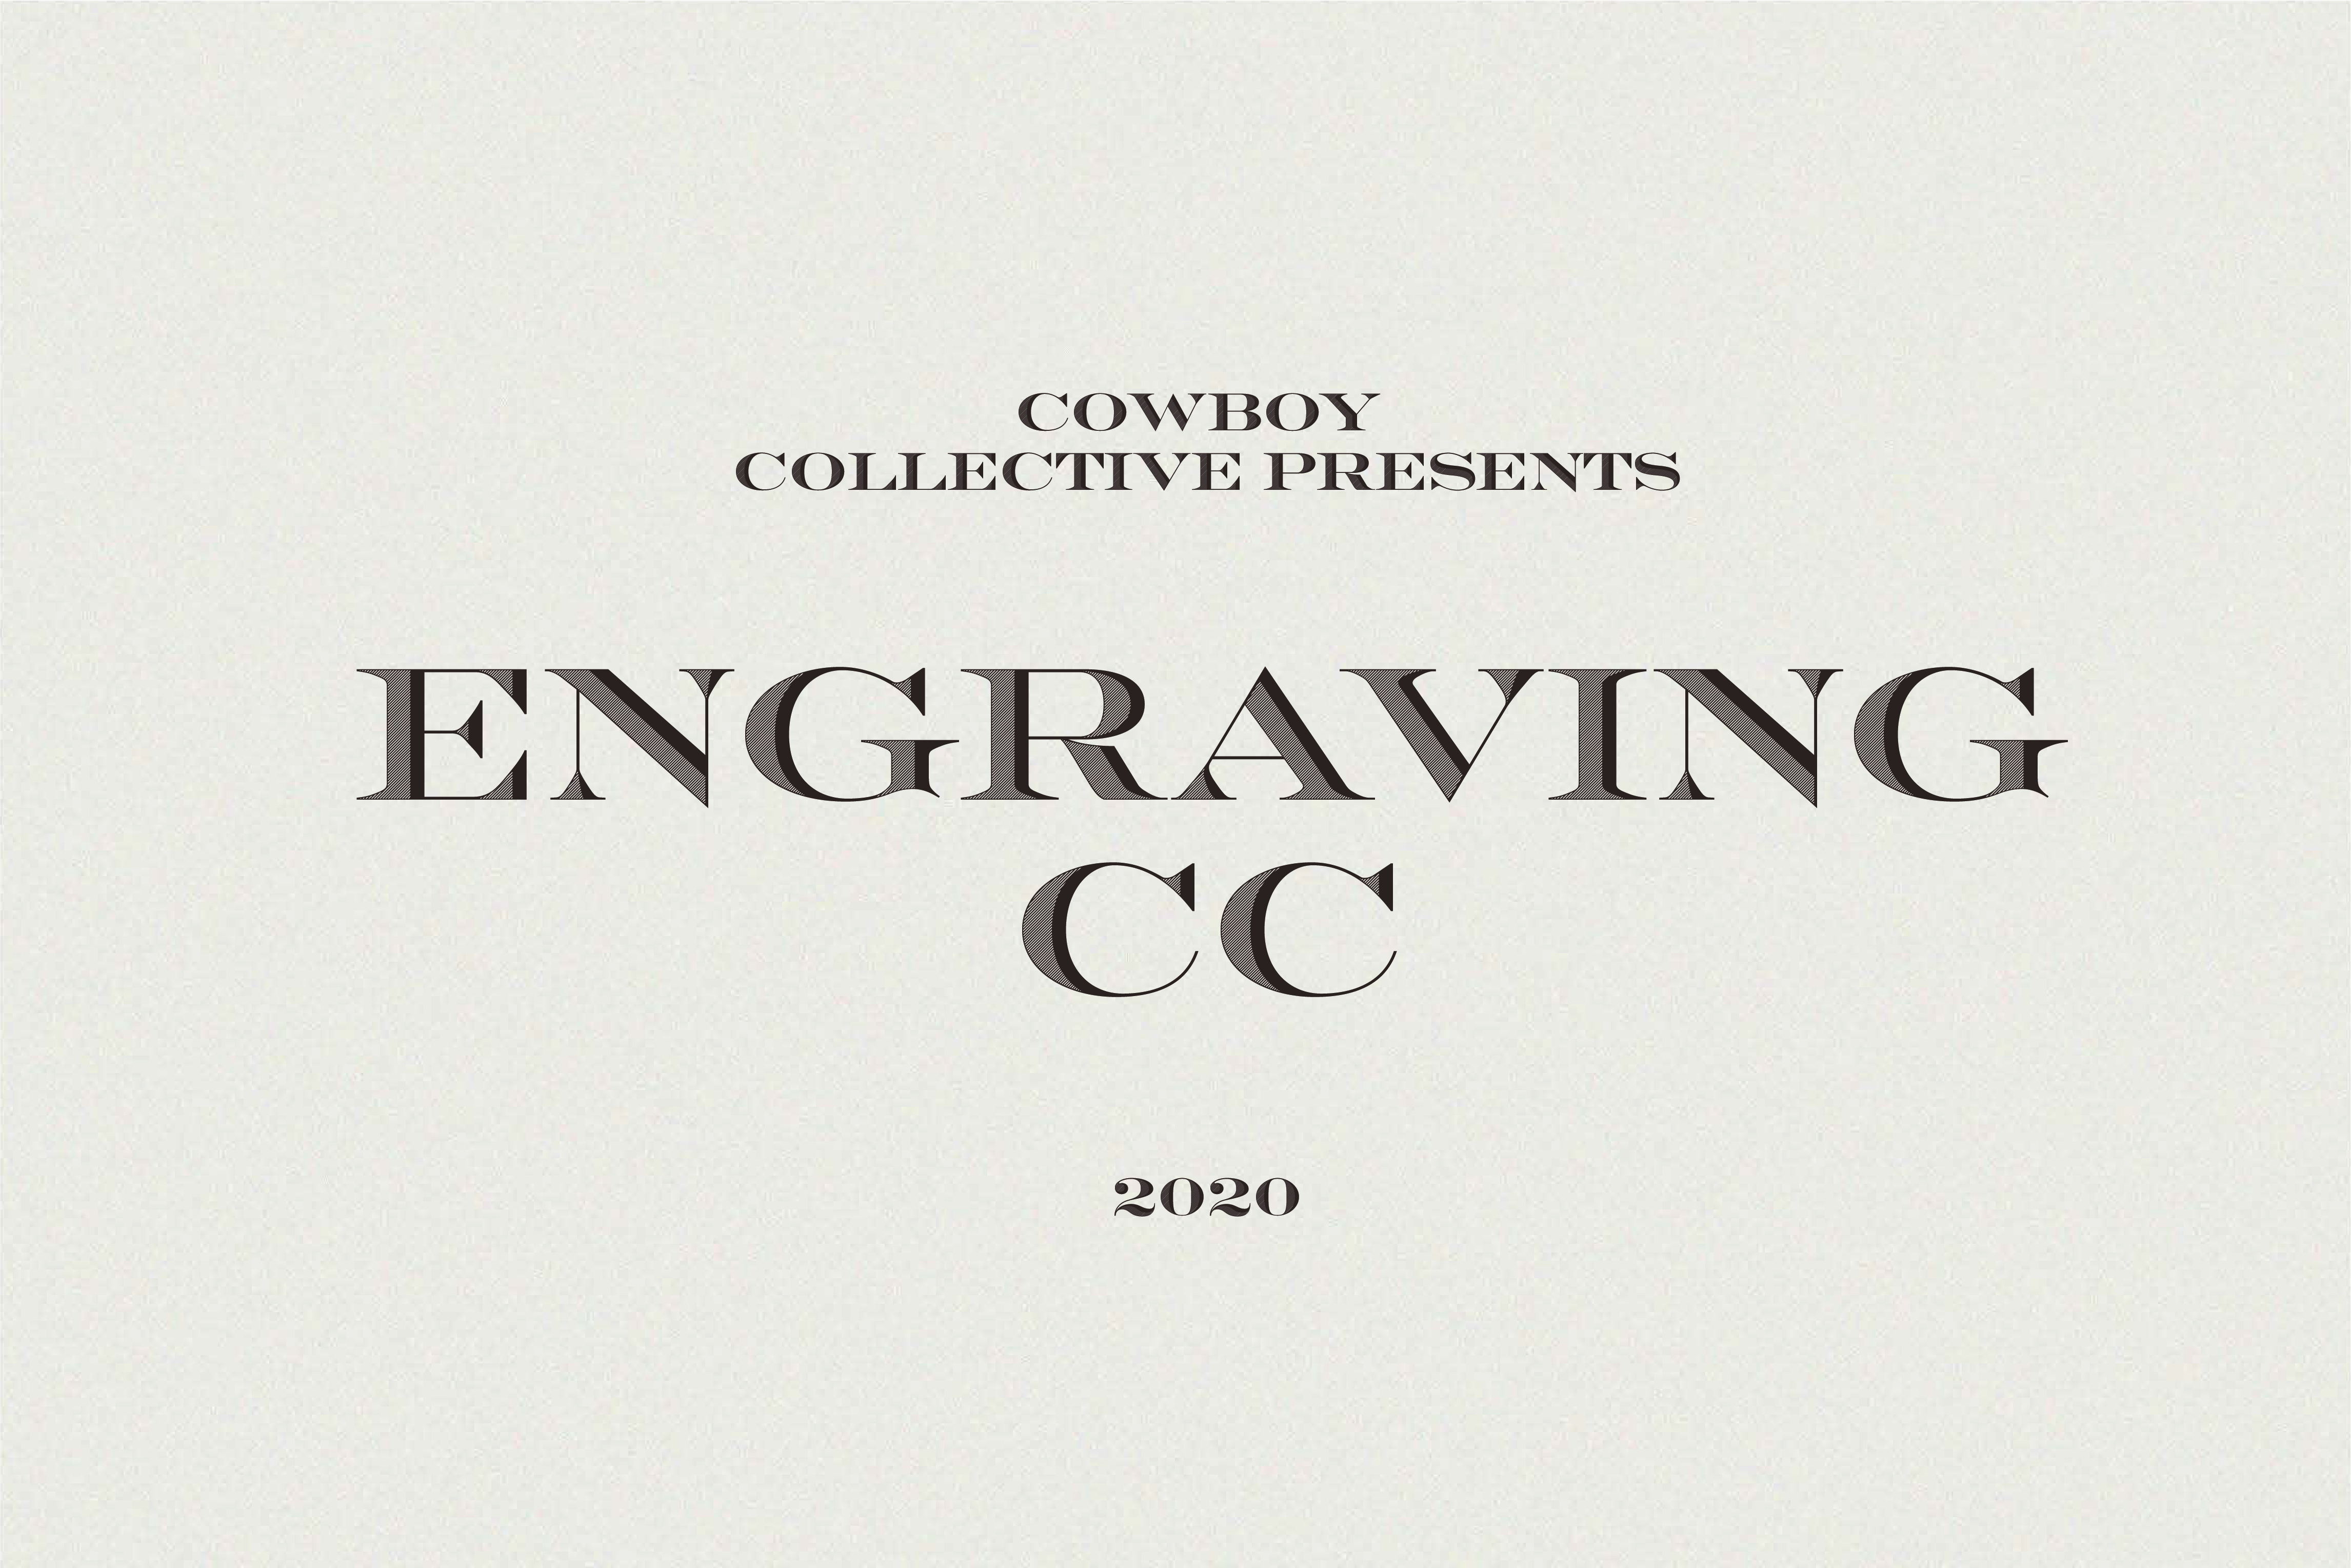 Engraving CC